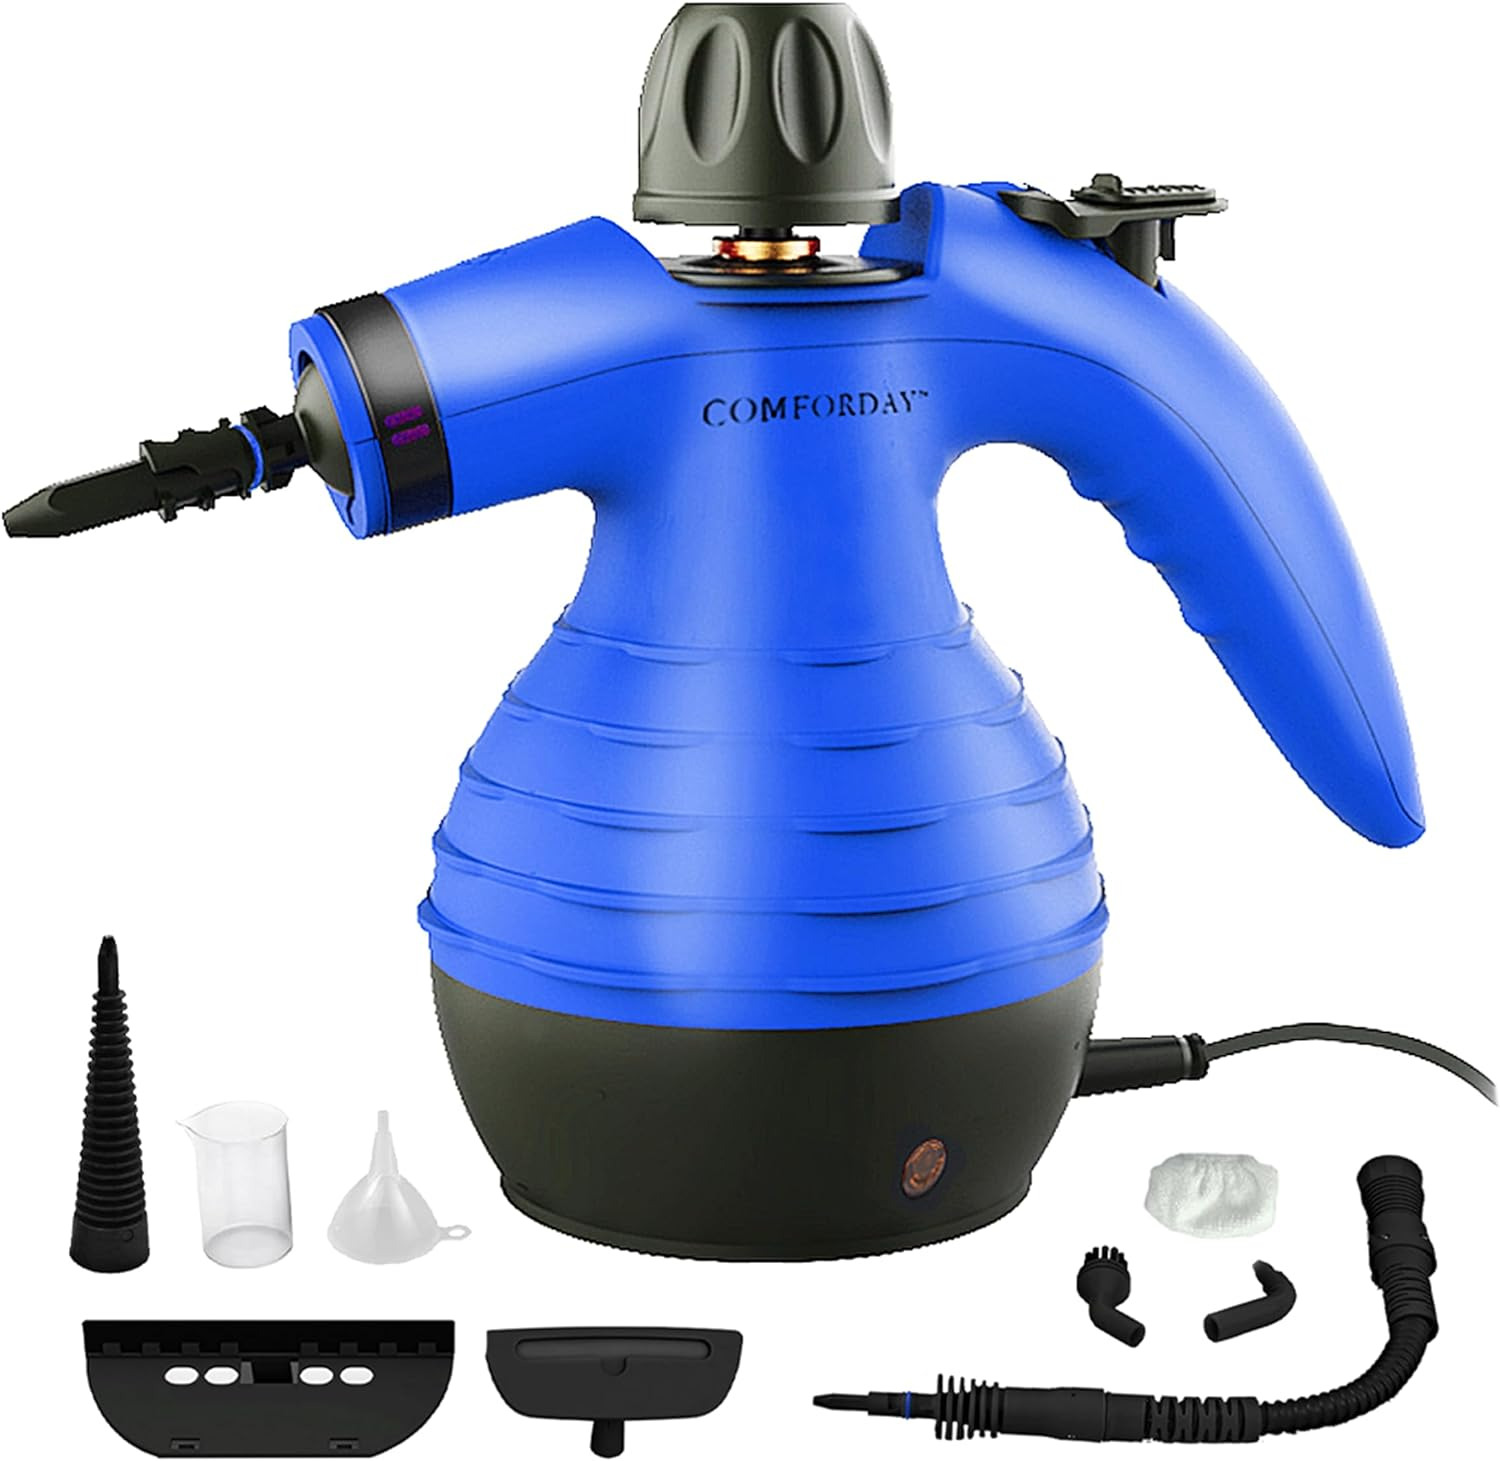 Multi-Purpose Handheld Pressurized Steam Cleaner with 9-Piece Accessories, Handh